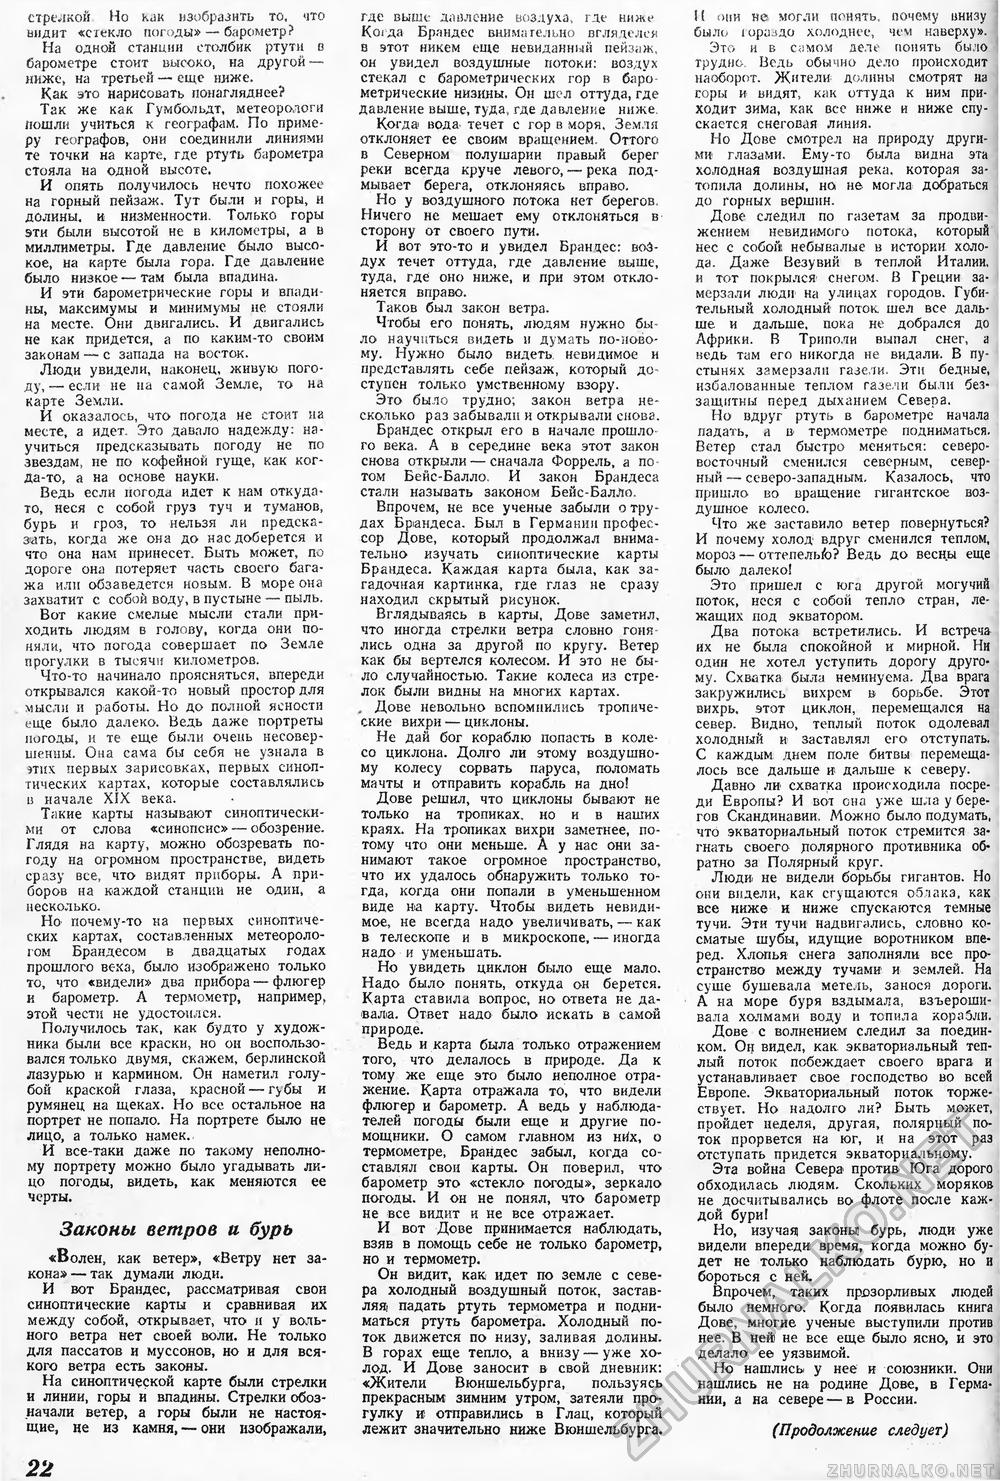 Техника - молодёжи 1946-05-06, страница 24